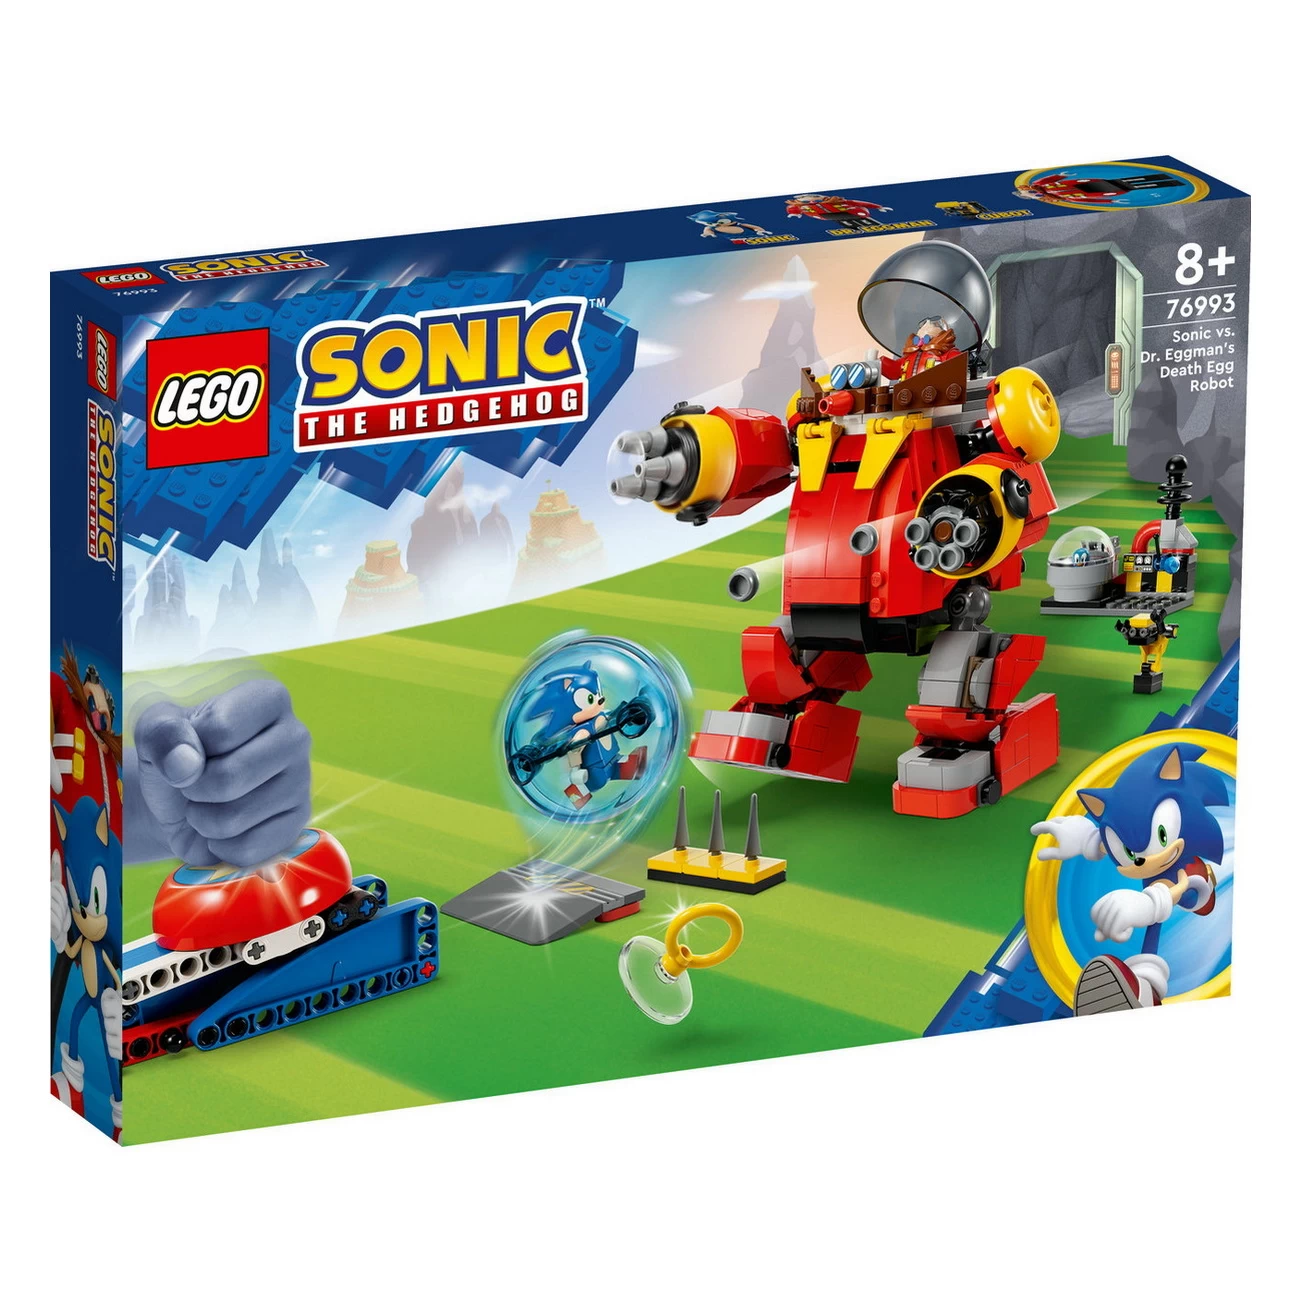 Sonic vs. Dr. Eggmans Death Egg Robot (76993)